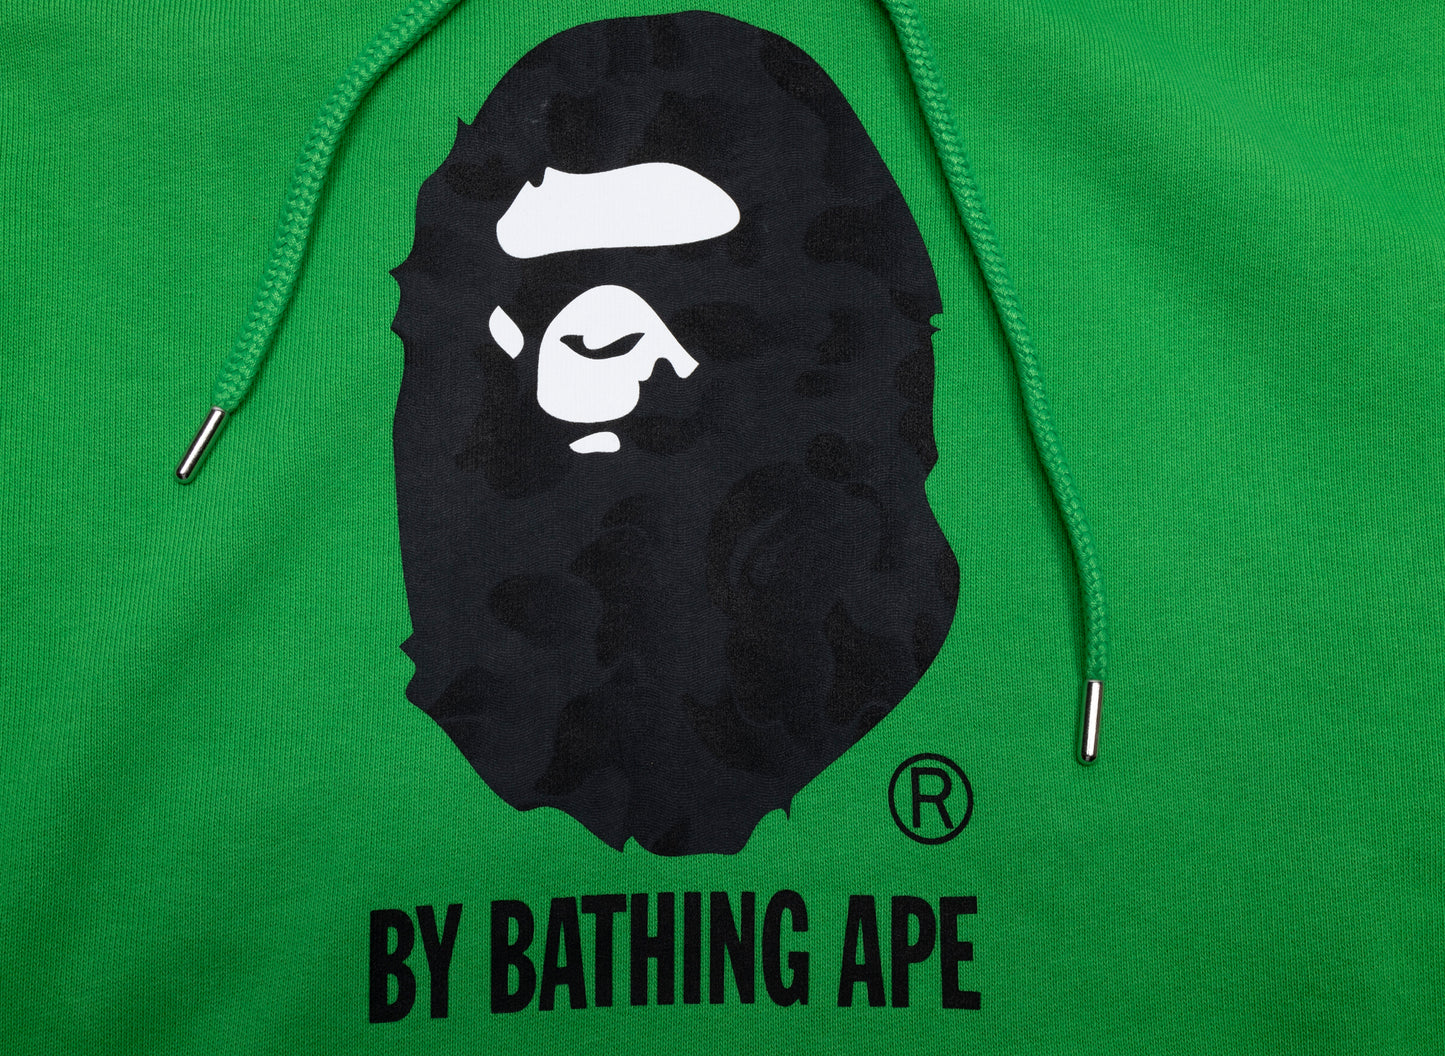 A Bathing Ape Ink Camo by Bathing Ape Pullover Hoodie in Green xld